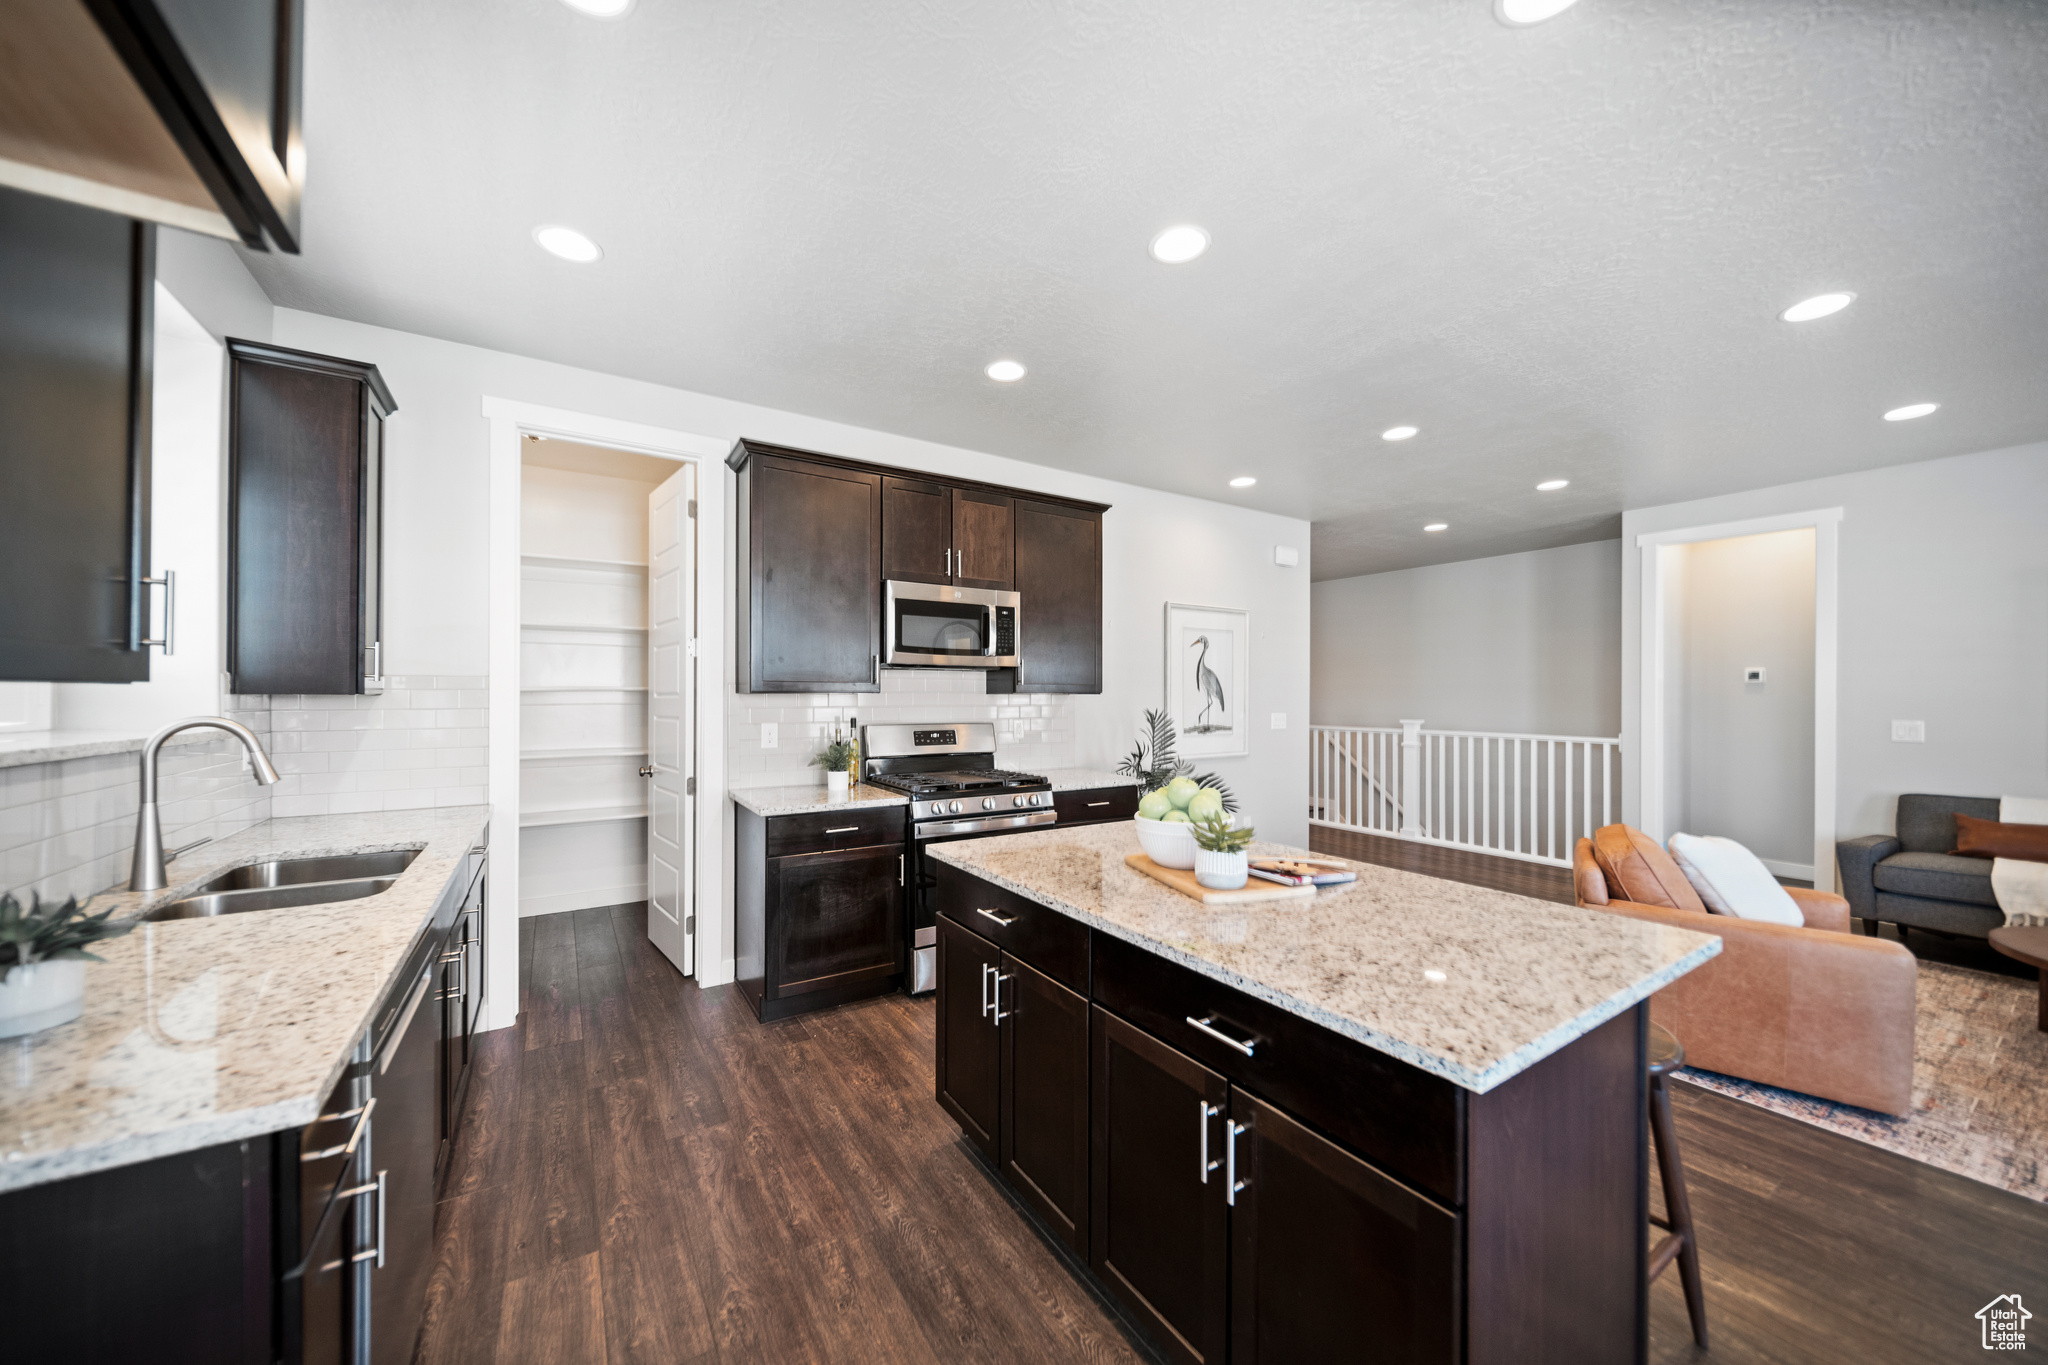 Kitchen featuring a breakfast bar, dark hardwood / wood-style floors, stainless steel appliances, sink, and tasteful backsplash